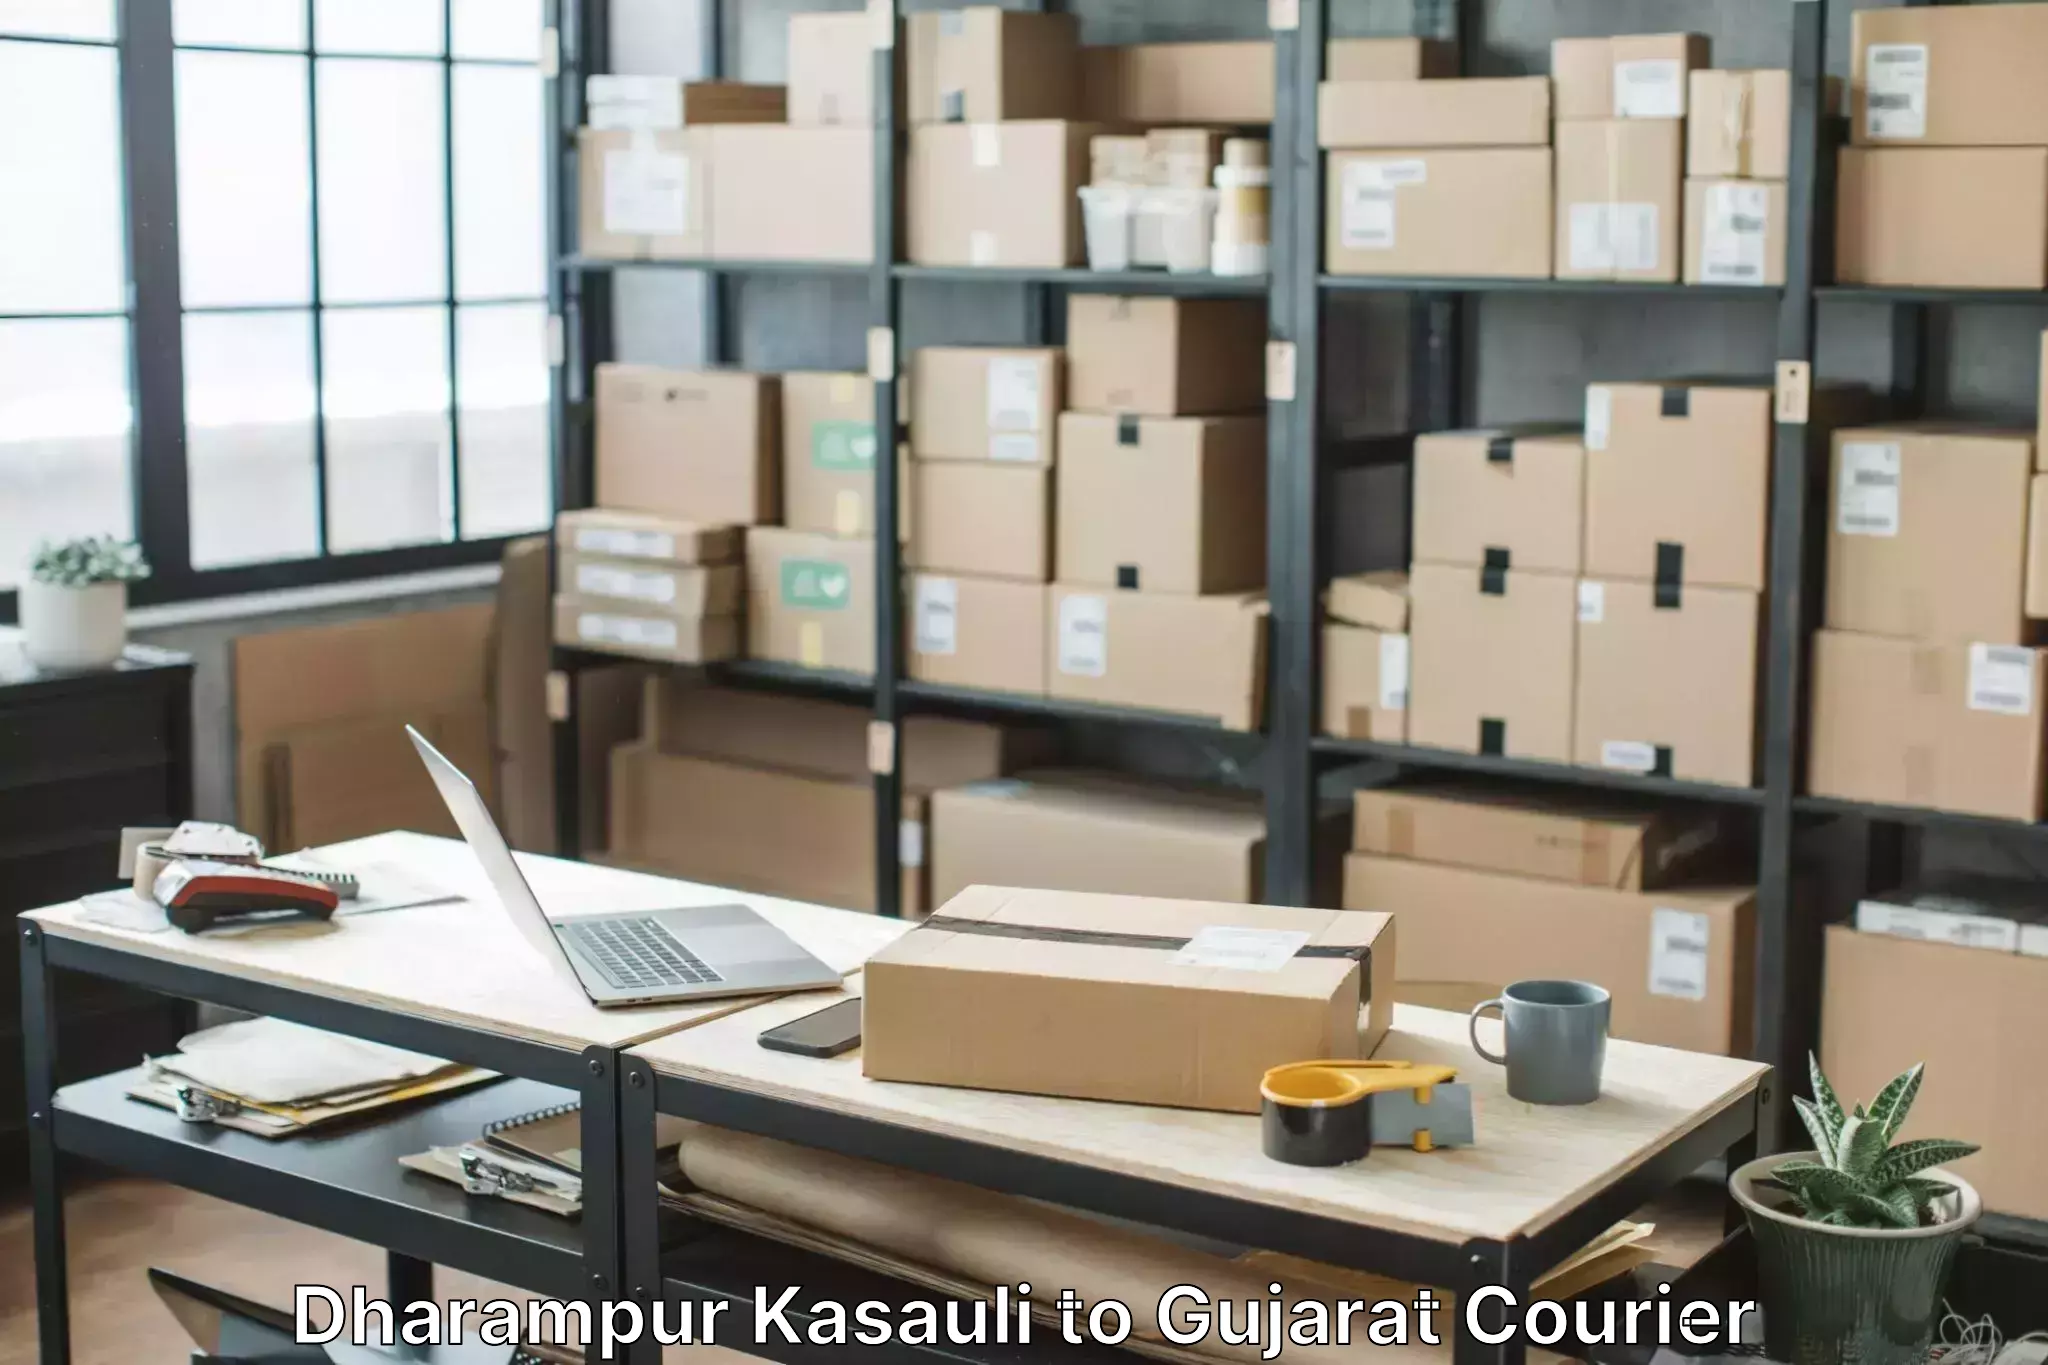 Moving and packing experts Dharampur Kasauli to Gujarat